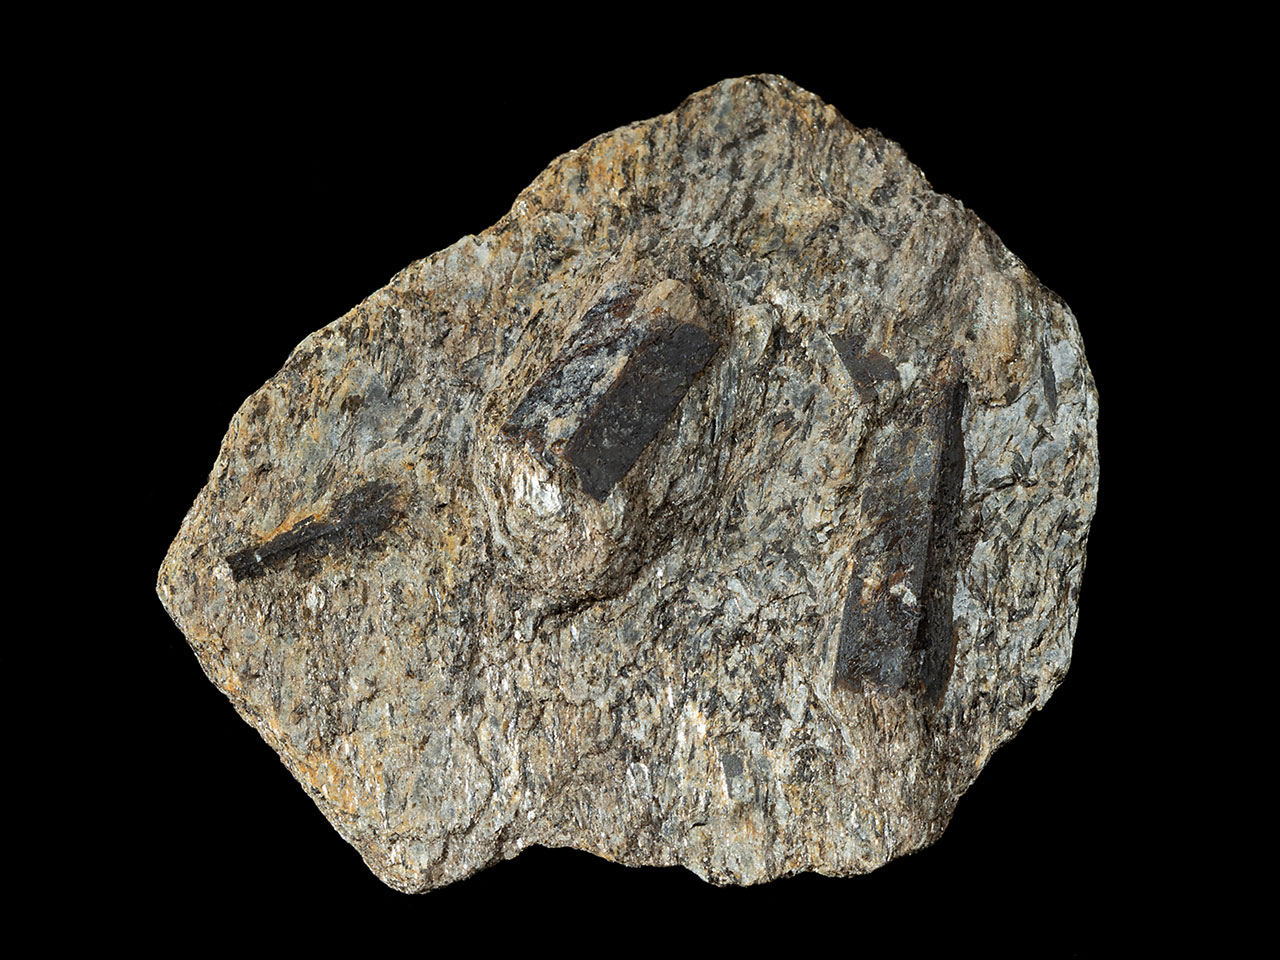 Non-twinned staurolite crystals in mica-schist from Ostružná, Czech Republic